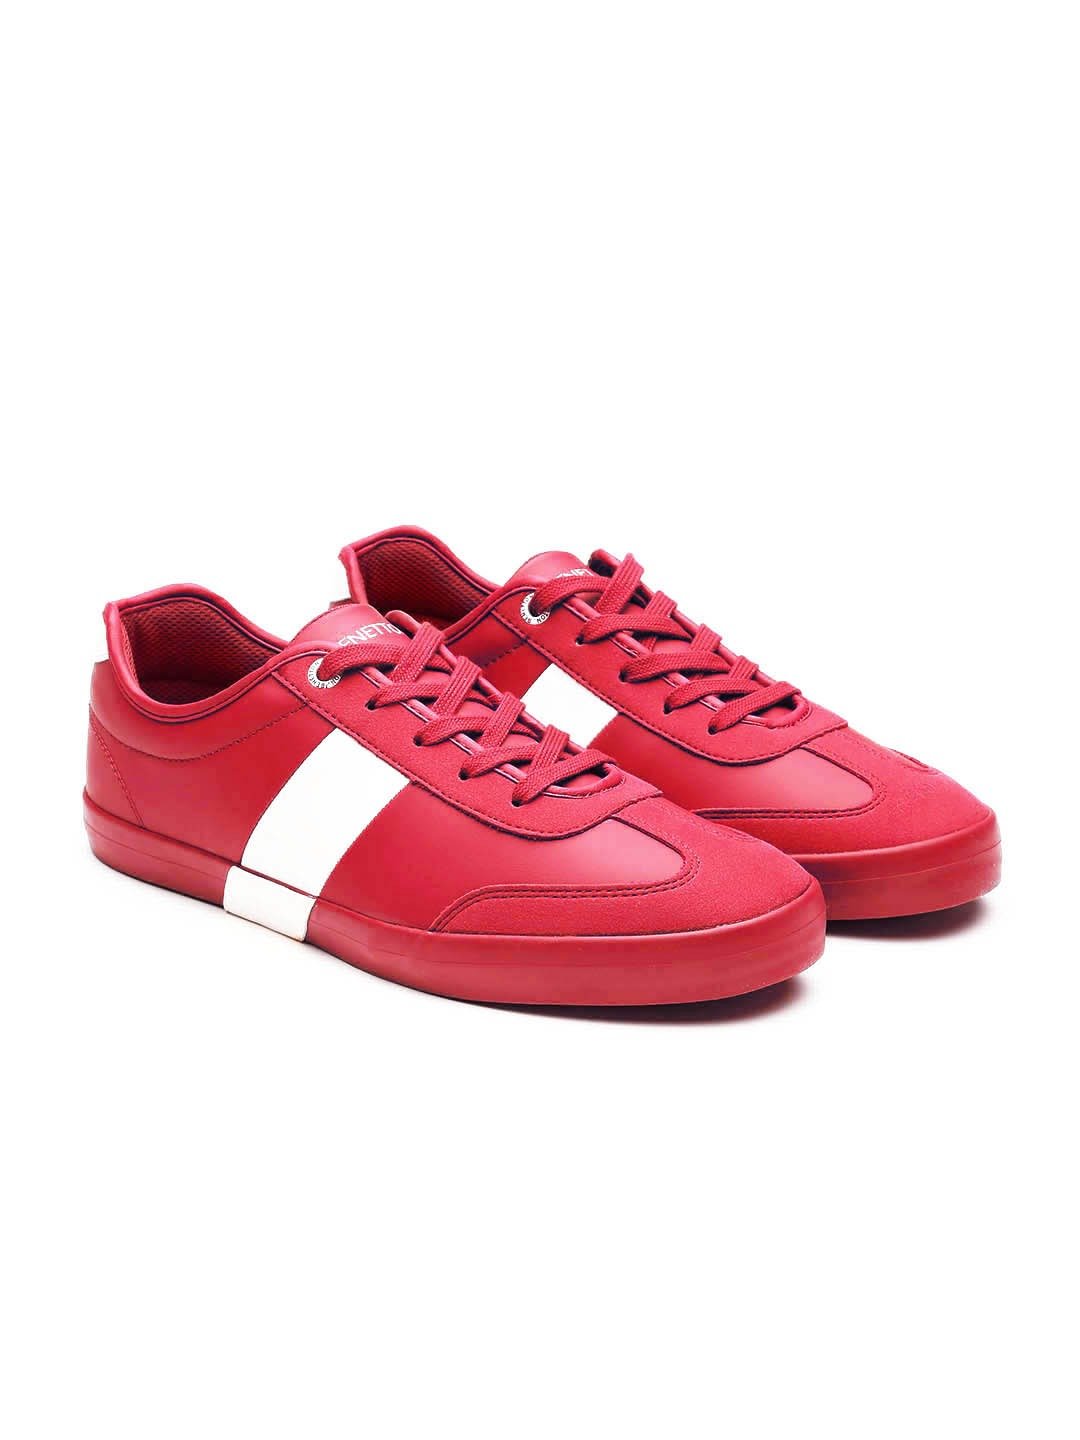 Men Red Sneakers - Discount Store